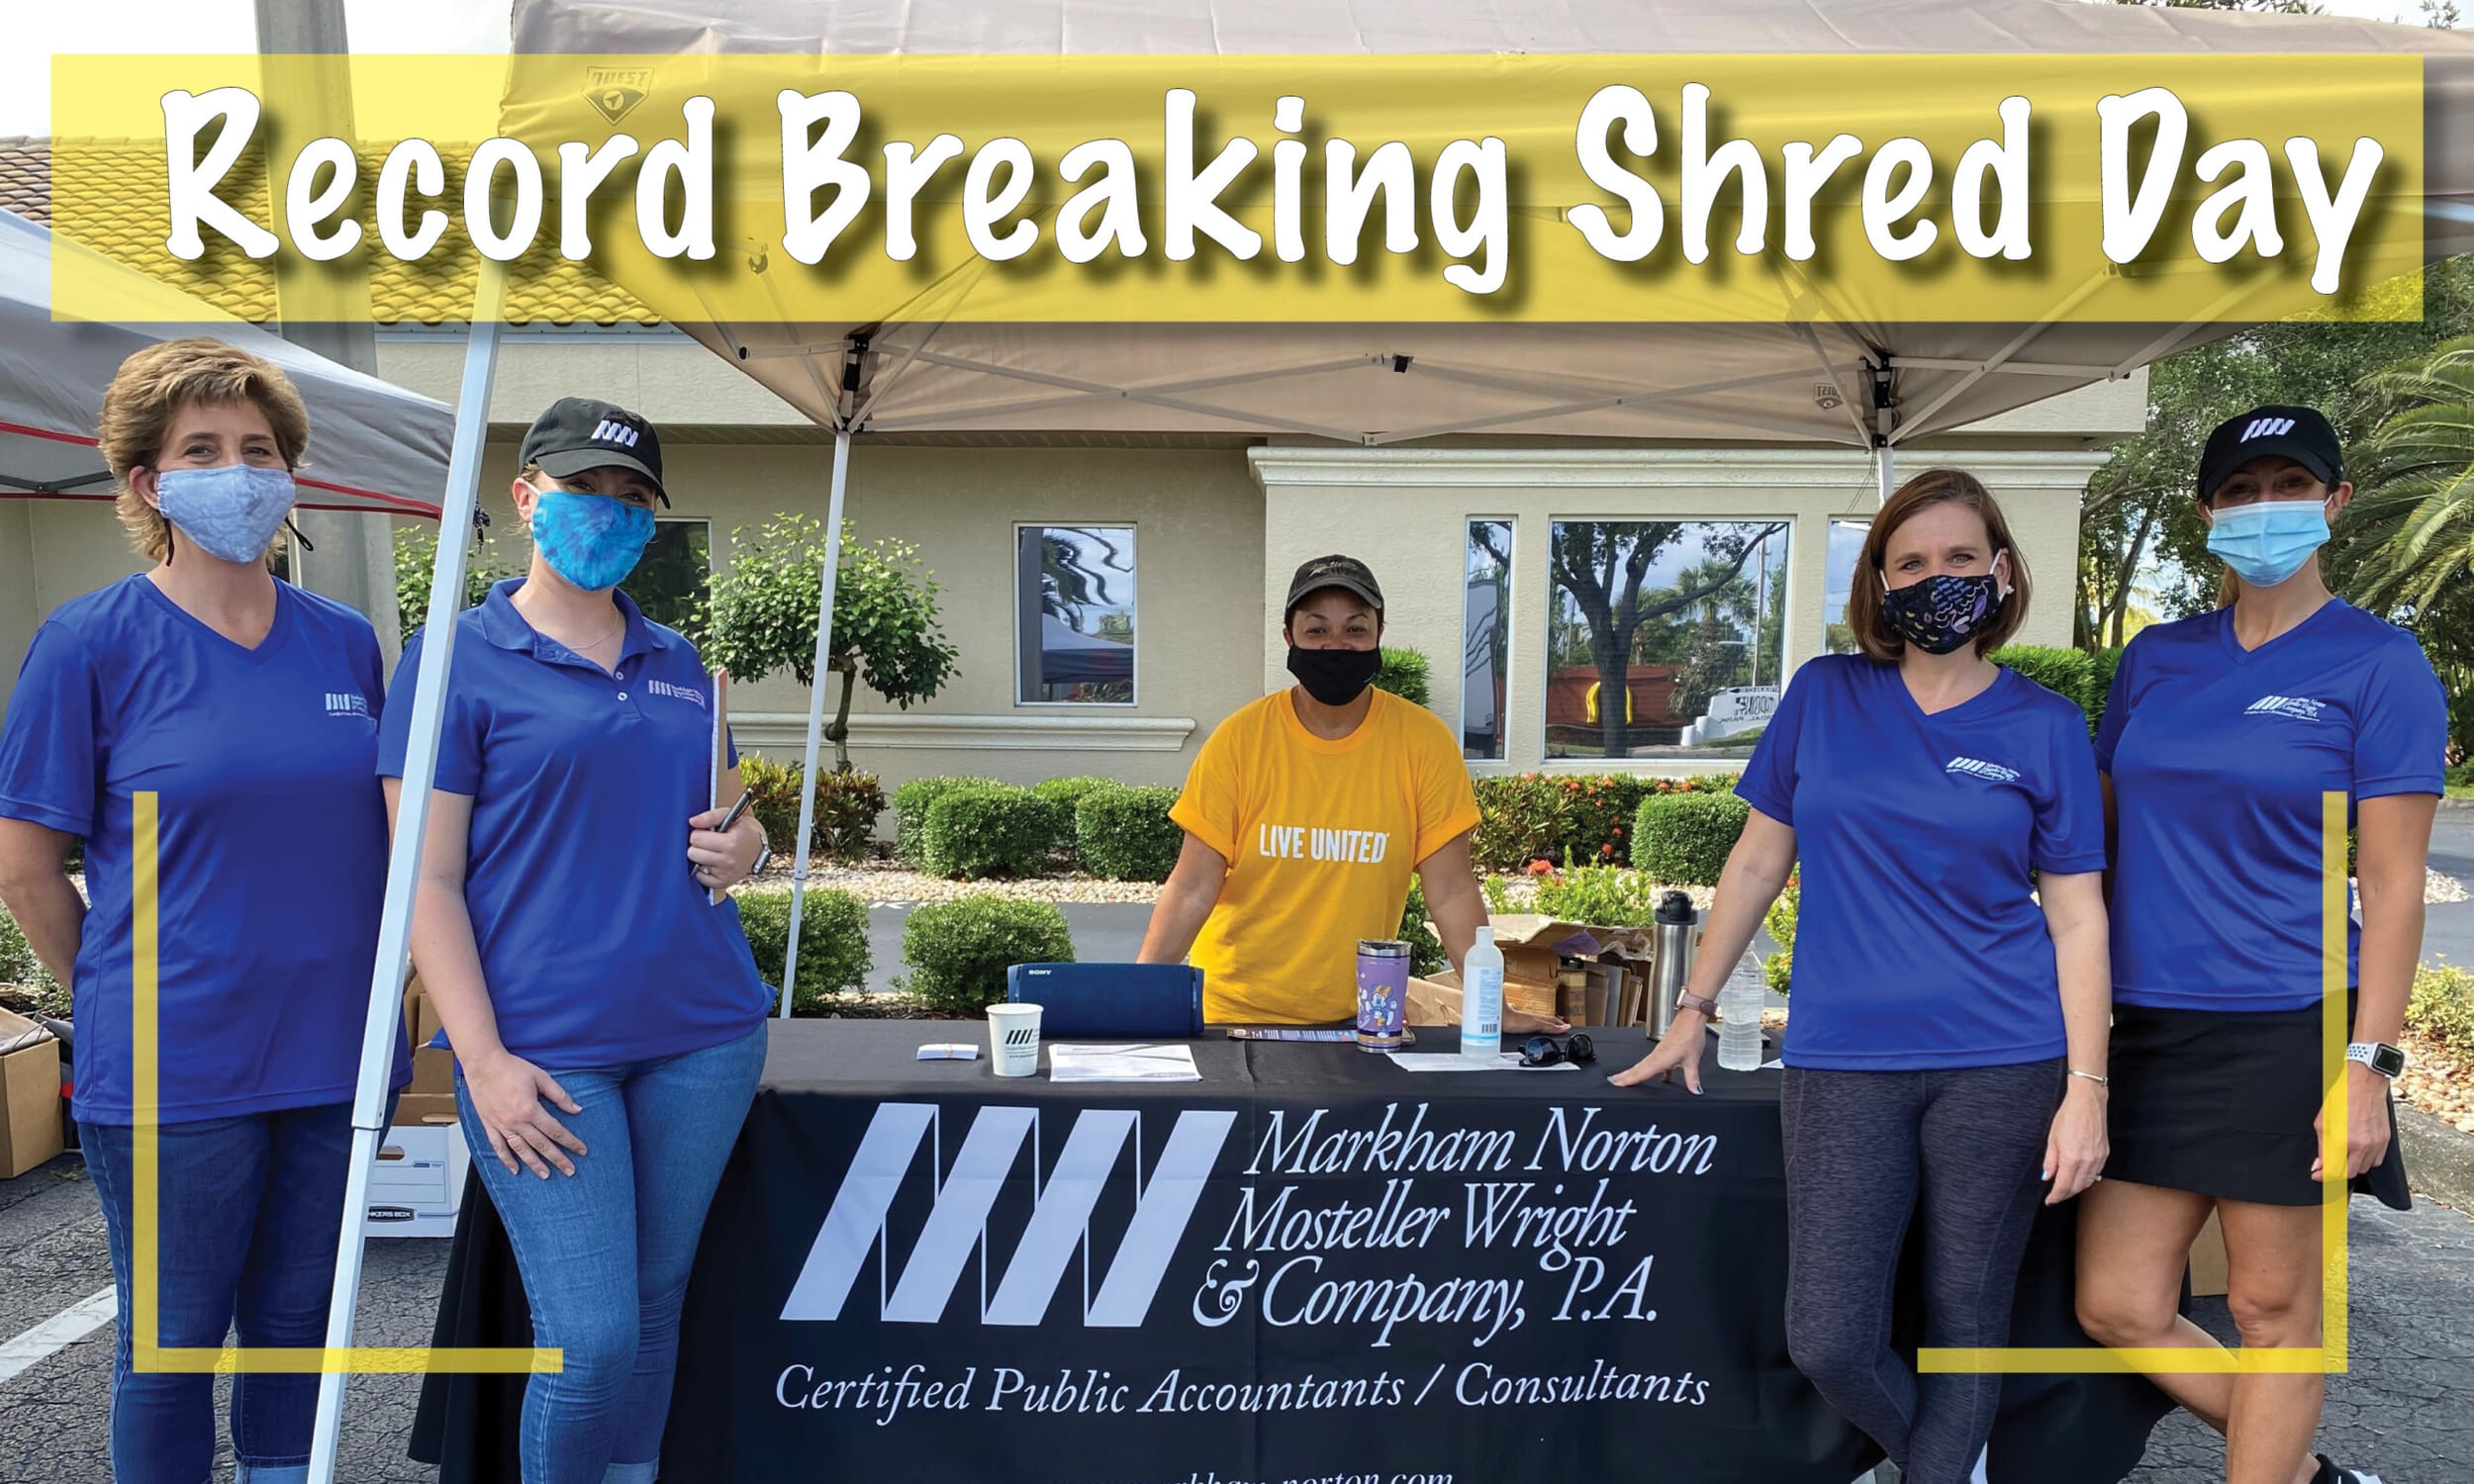 RecordBreaking Shred Day / Fort Myers, Naples / Markham Norton